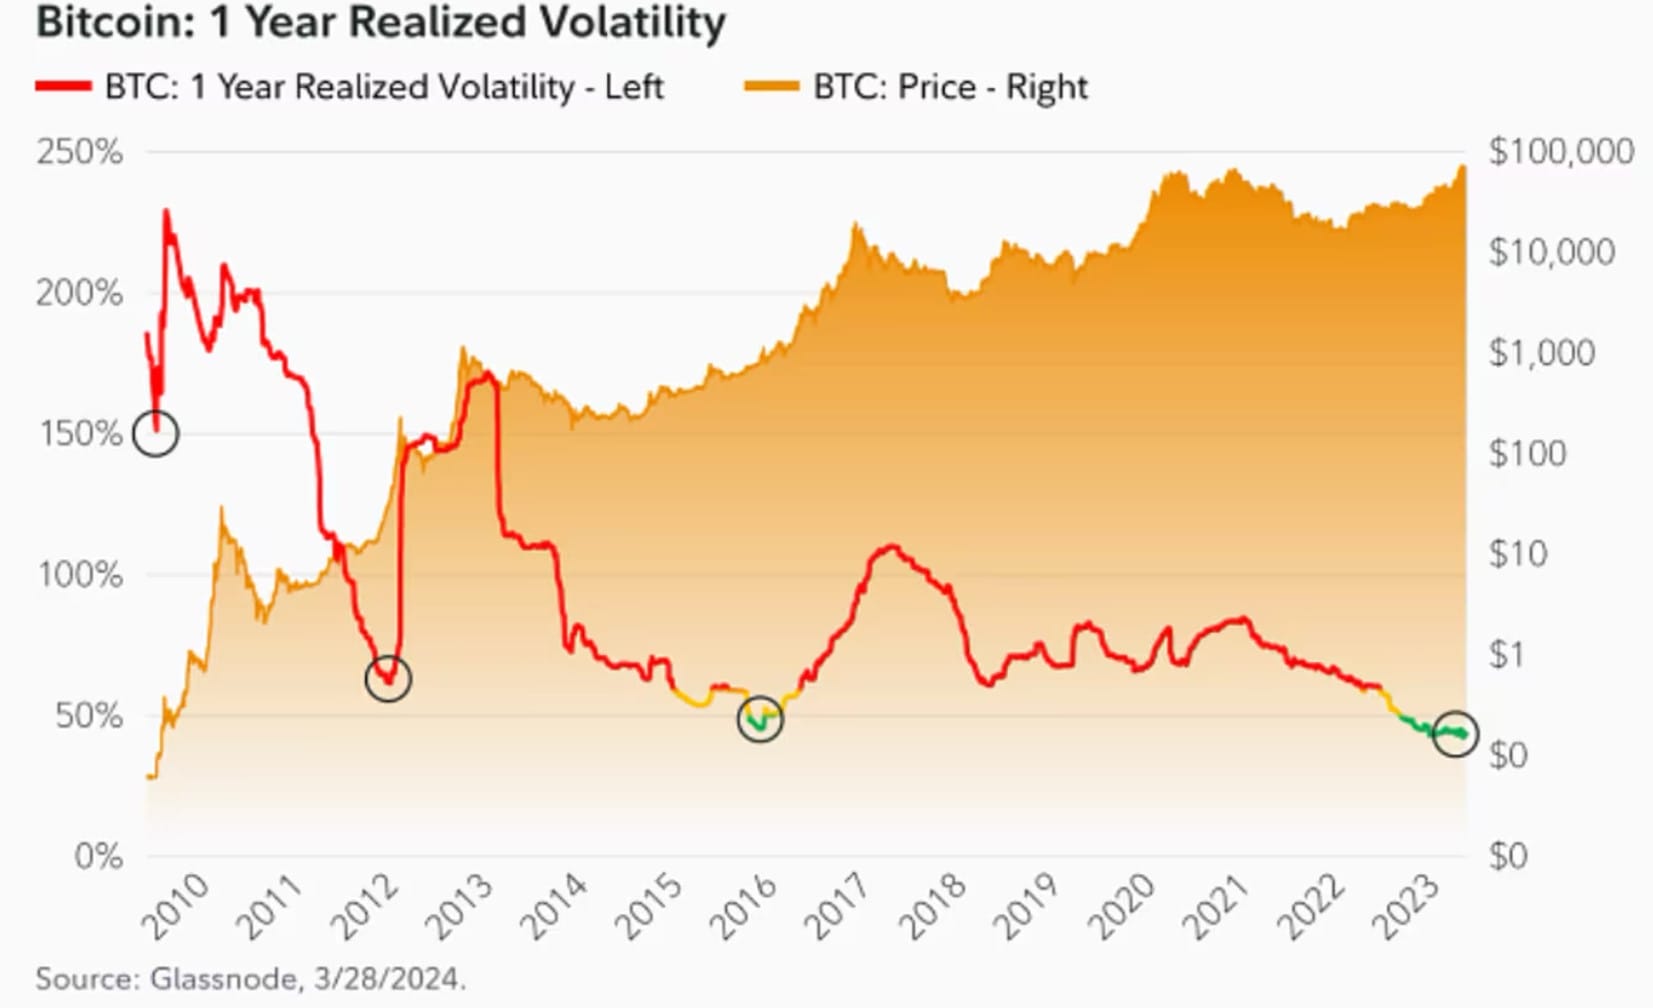 Bitcoin Record Low Volatility - Source: Fidelity